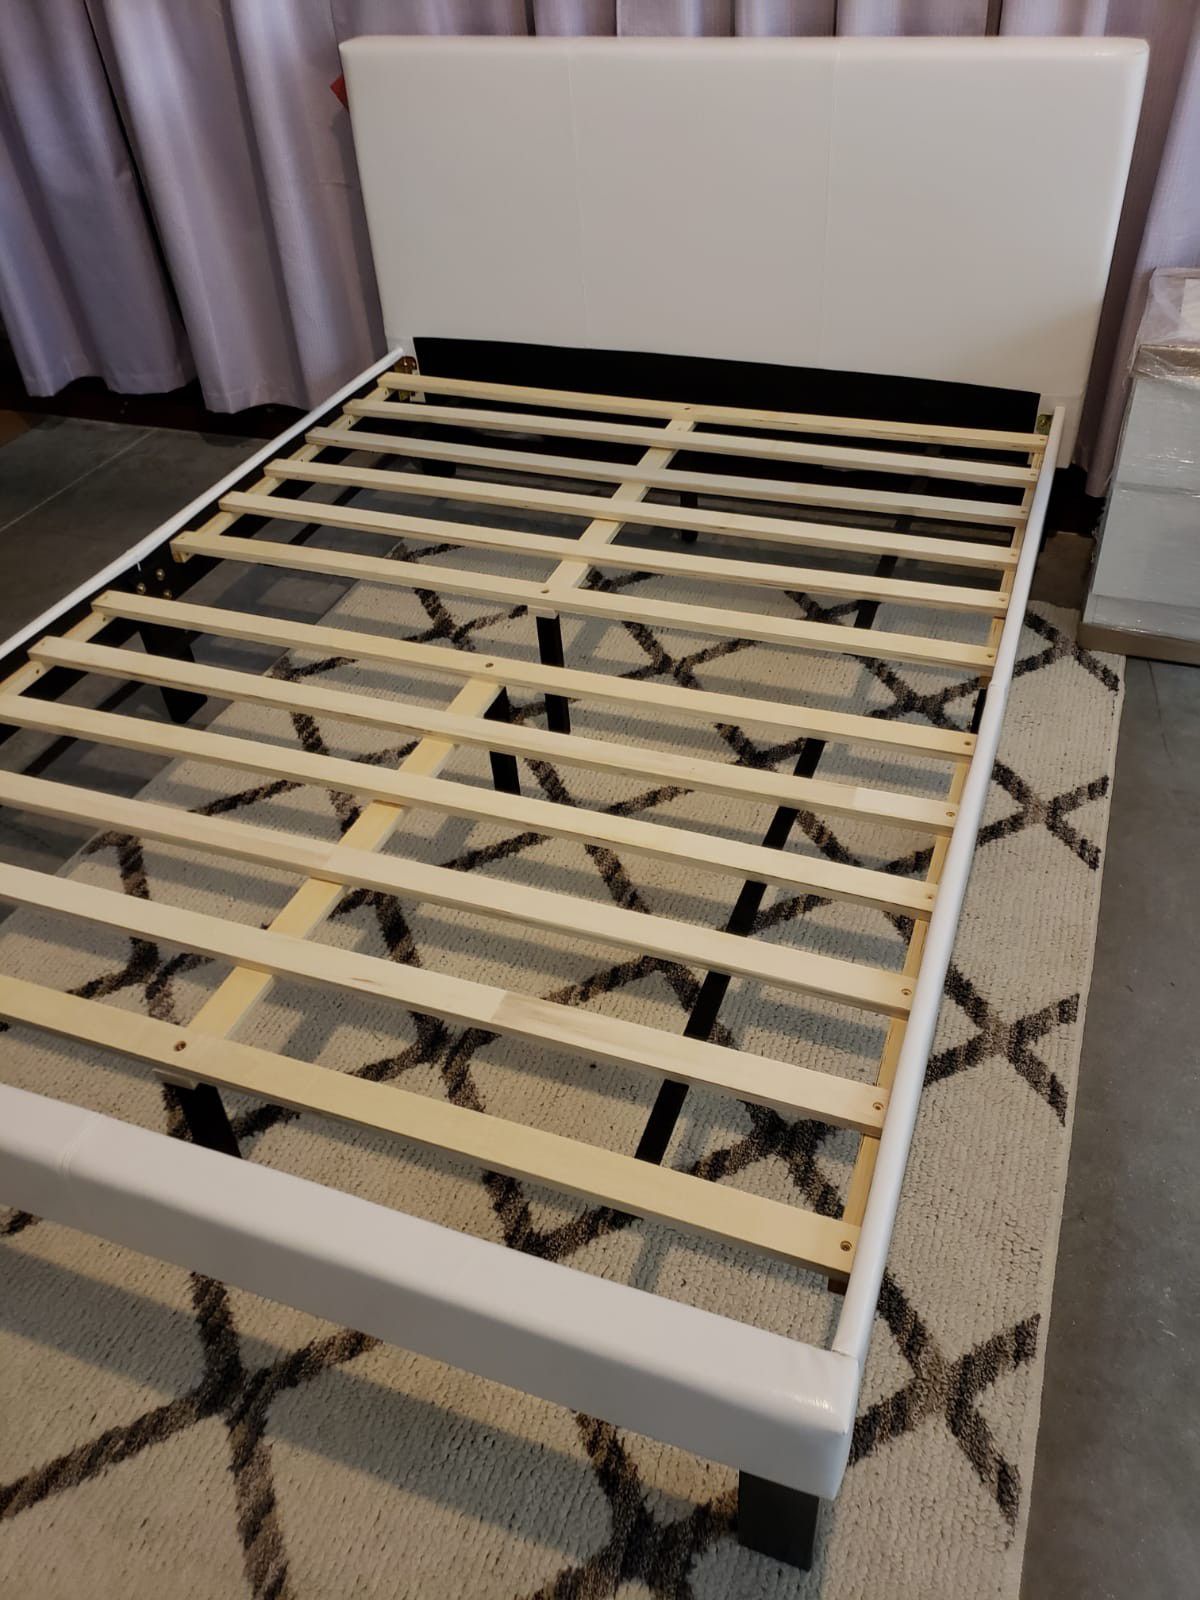 New FULL upholstered bed frame, mattress sold separately